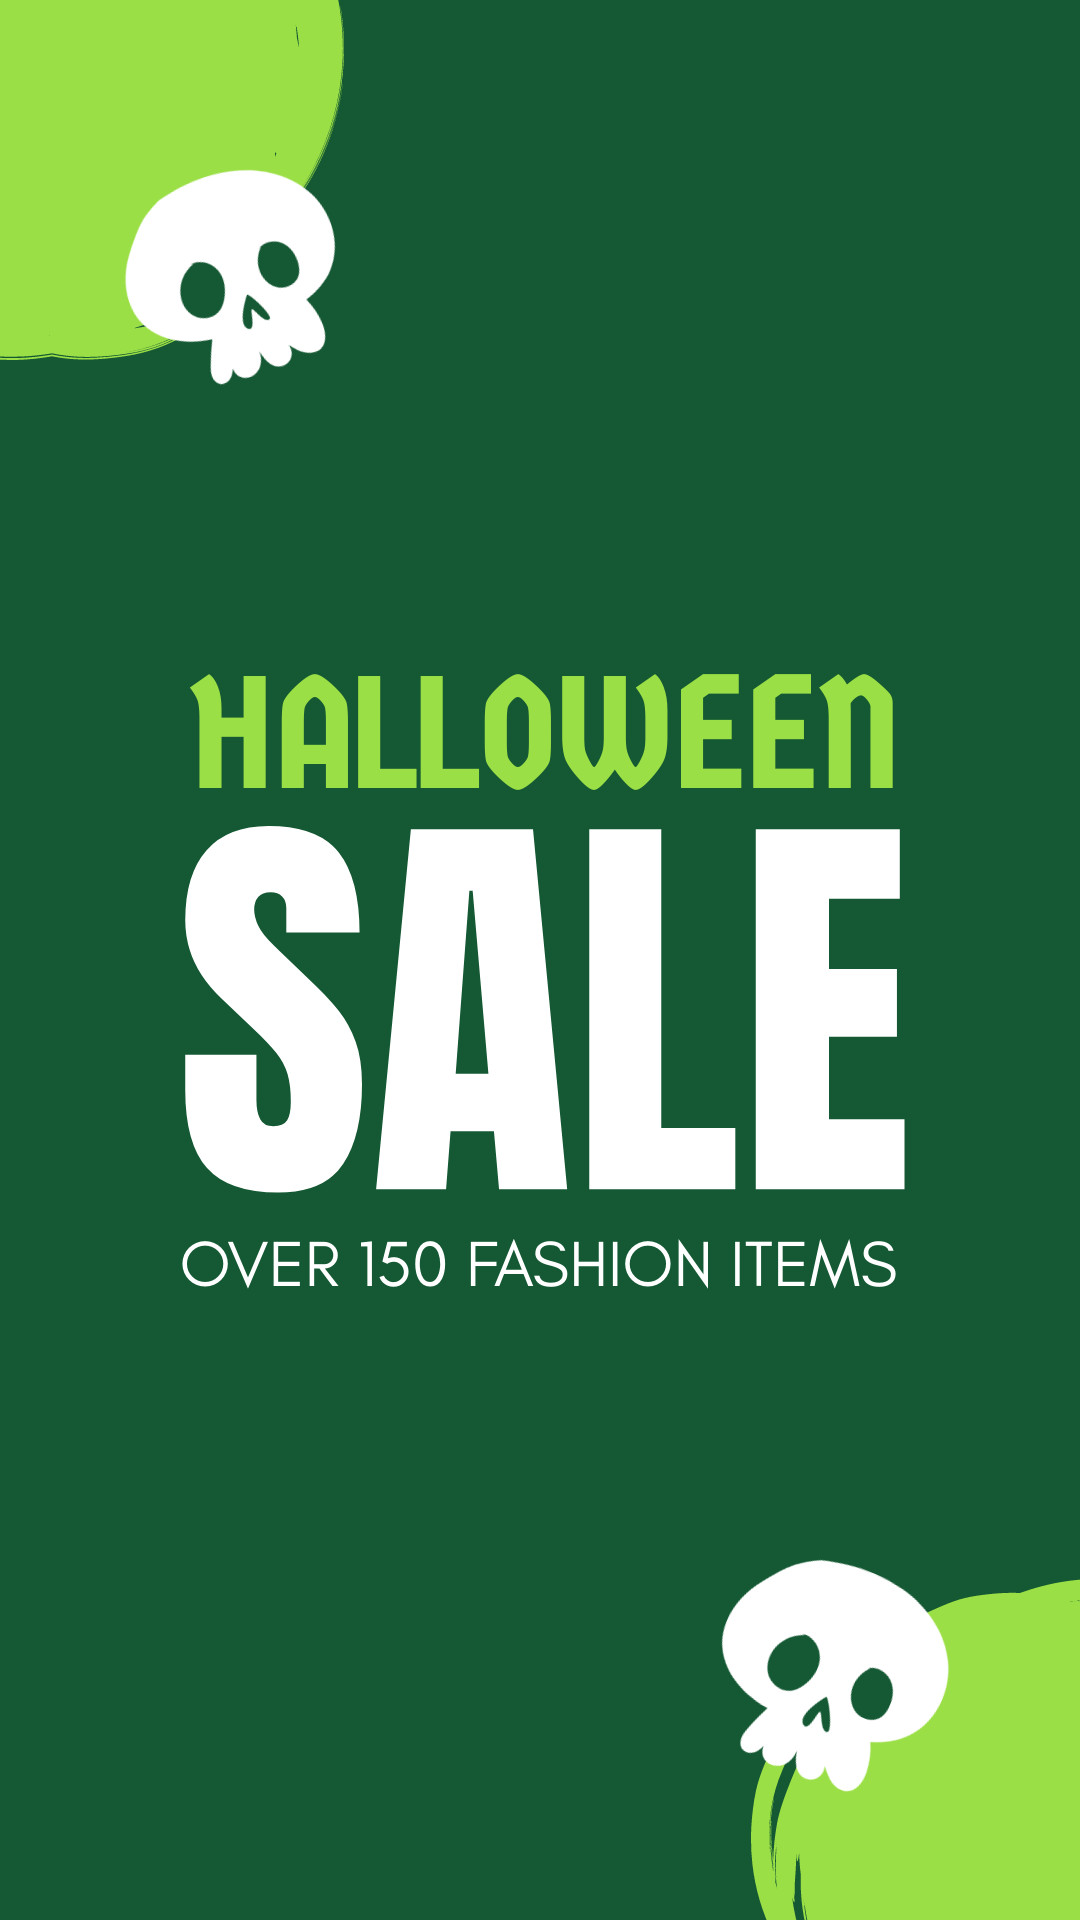 Fashion Items Halloween Sale